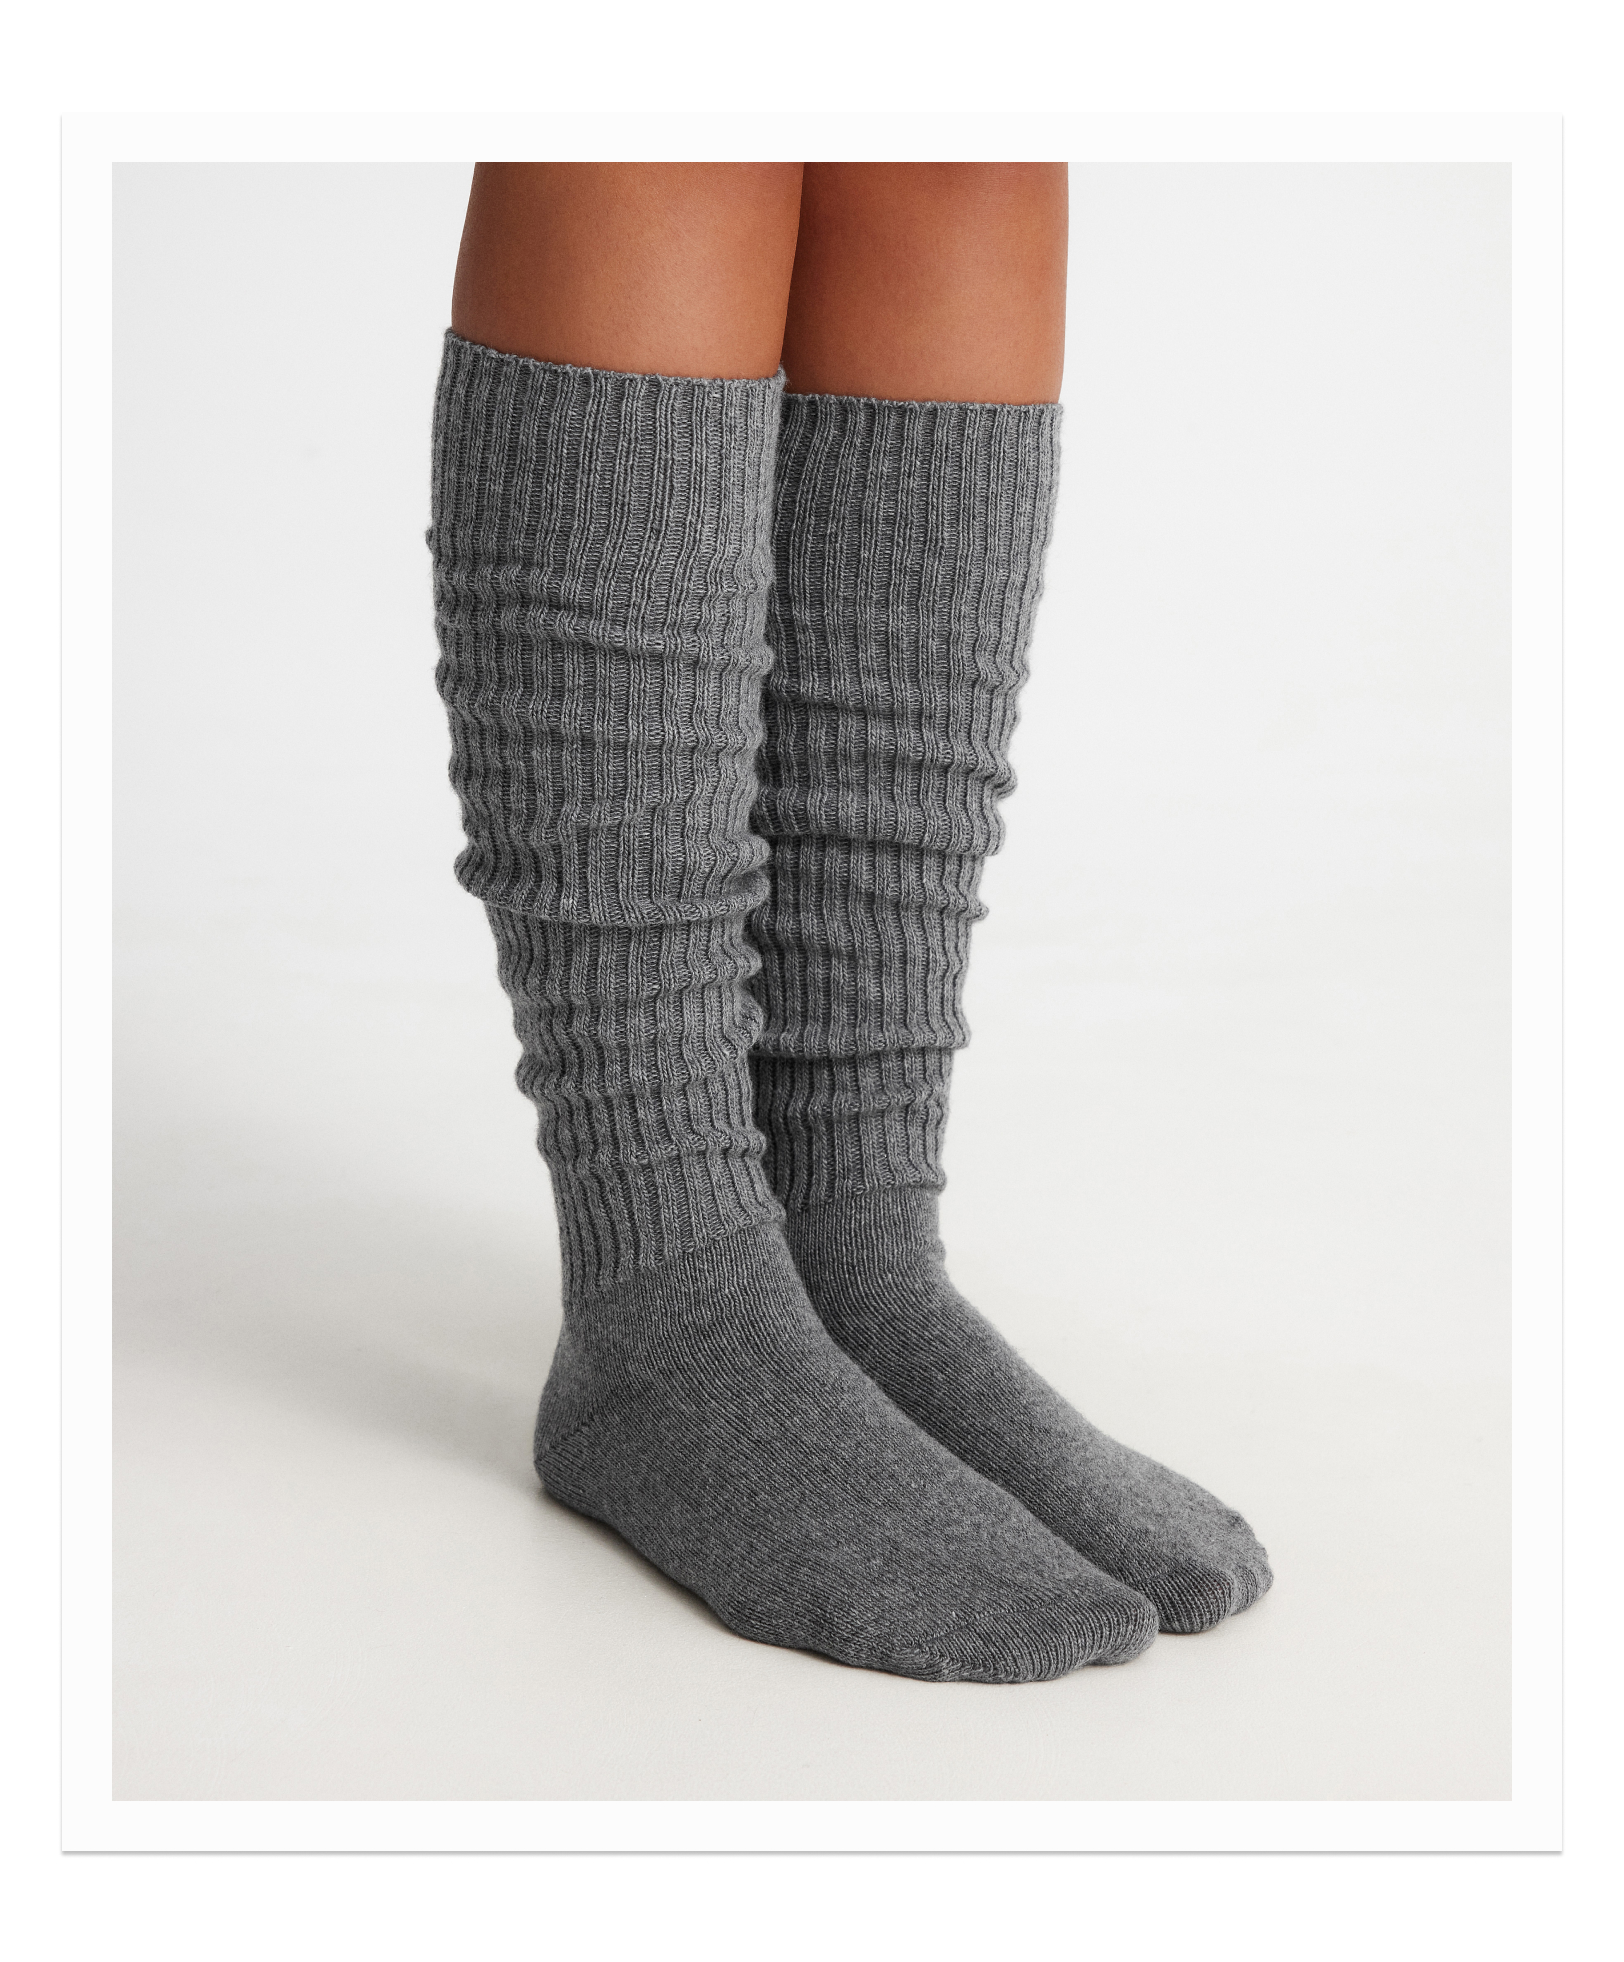 Long cashmere socks